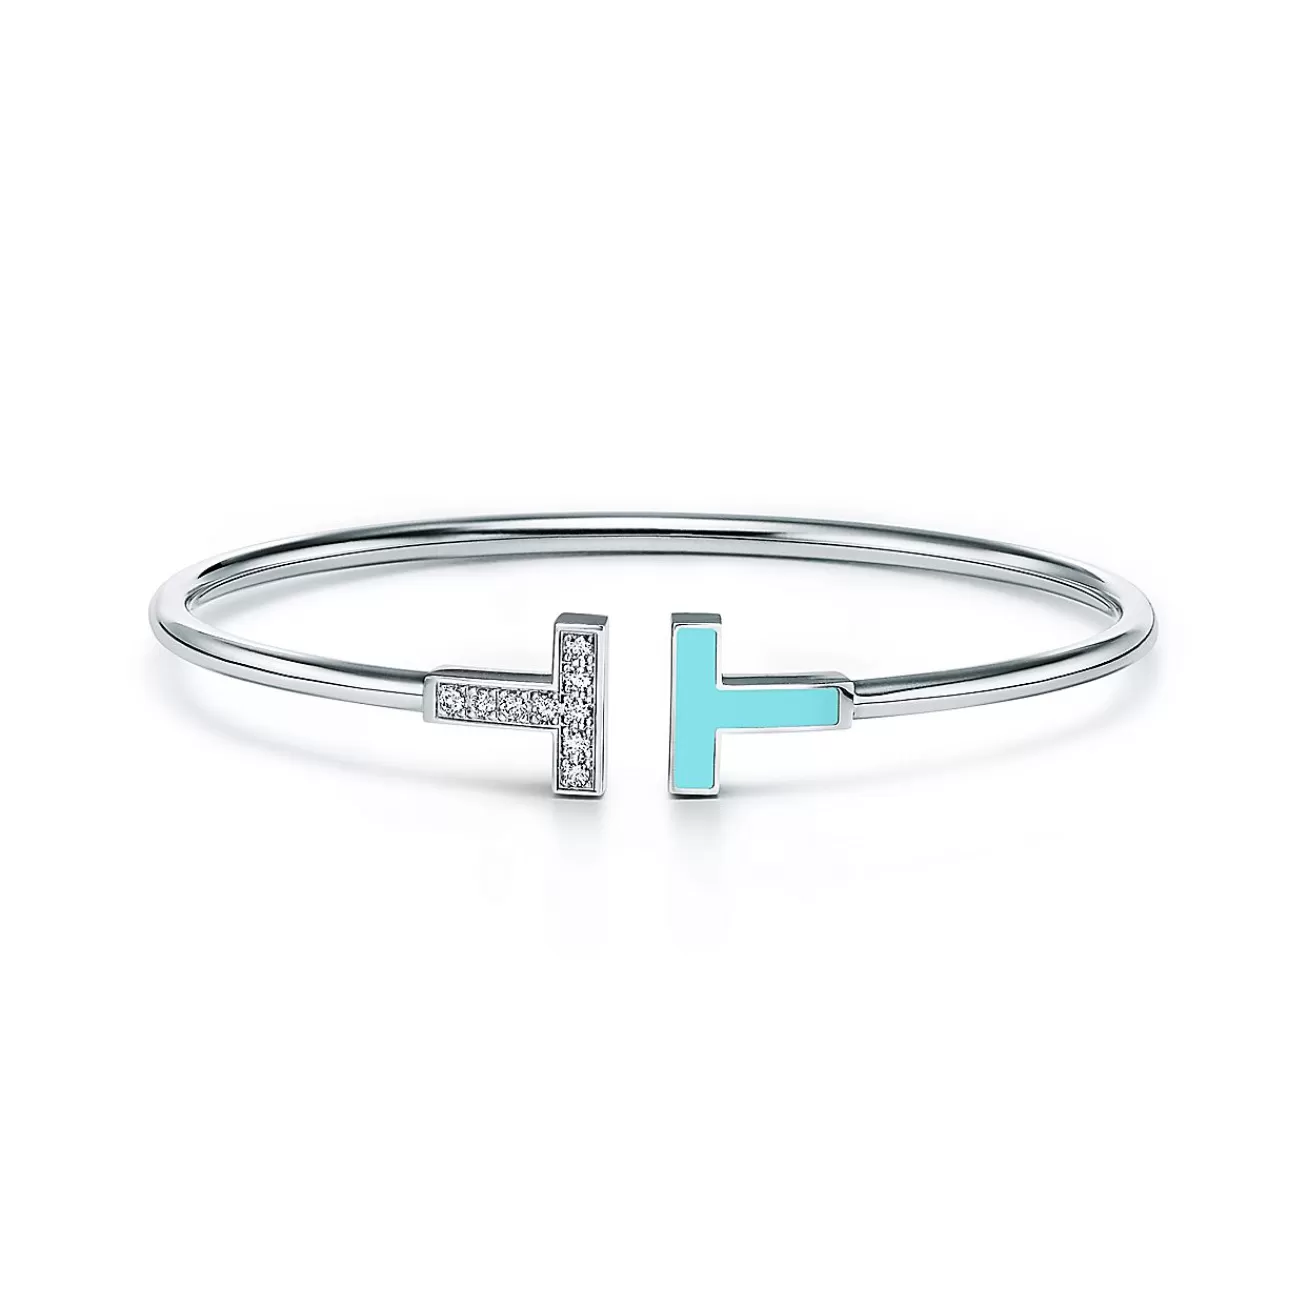 Tiffany & Co. Tiffany T diamond and turquoise wire bracelet in 18k white gold, medium. | ^ Bracelets | Dainty Jewelry